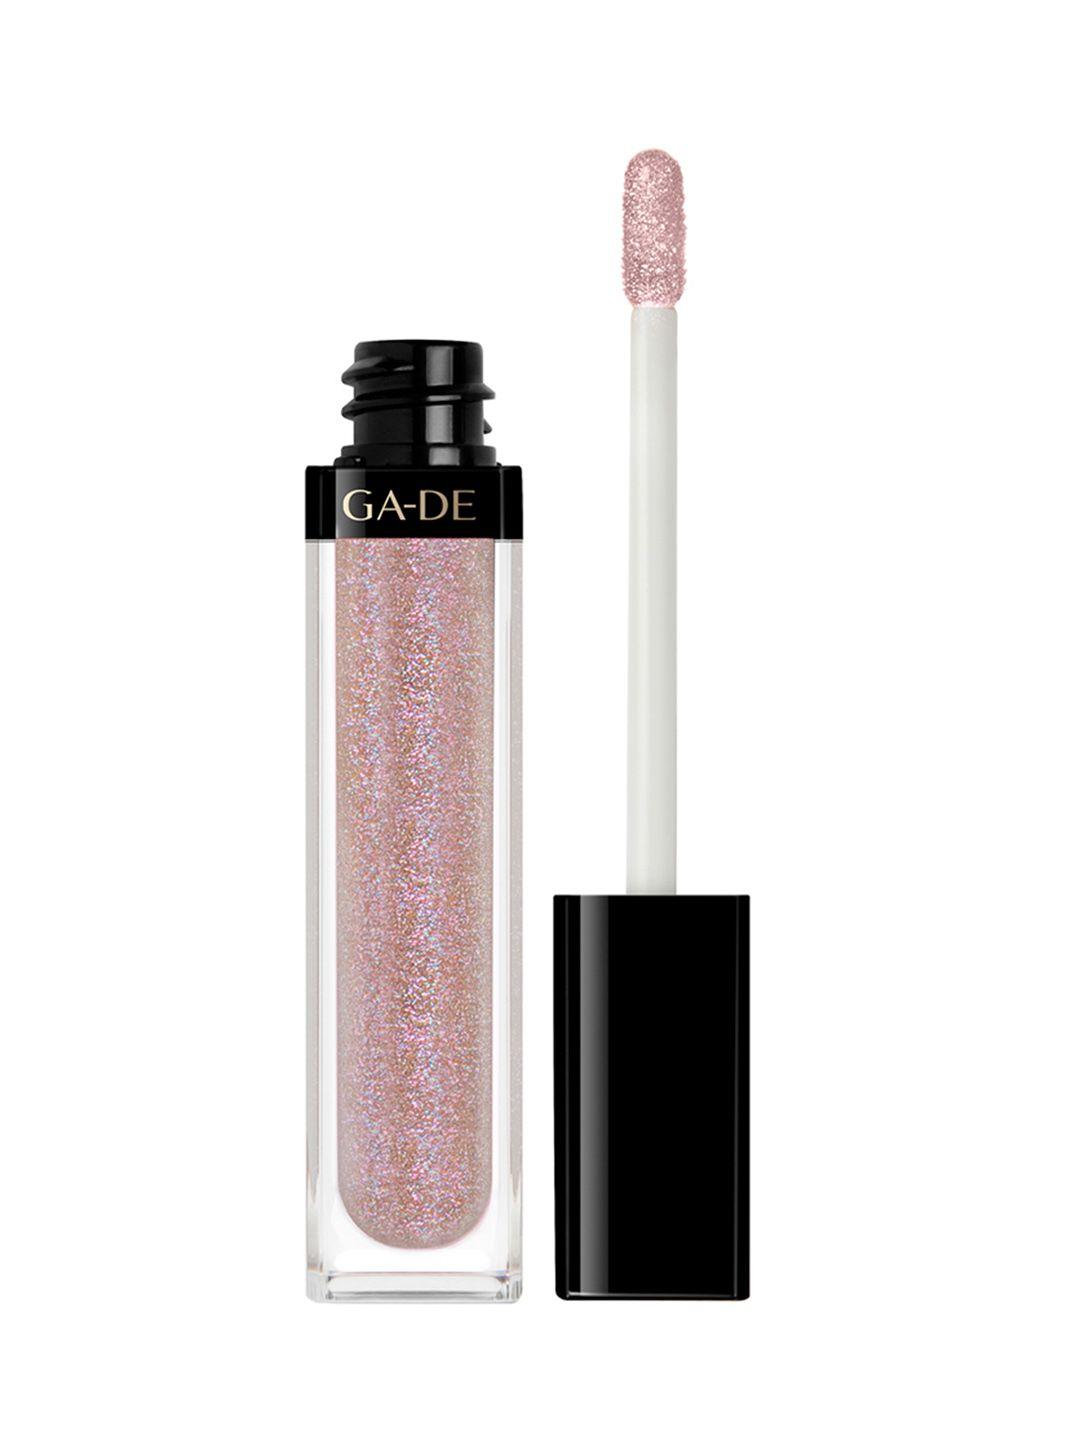 ga-de long lasting & moisturizing crystal lights lip gloss 6ml - bright star 817